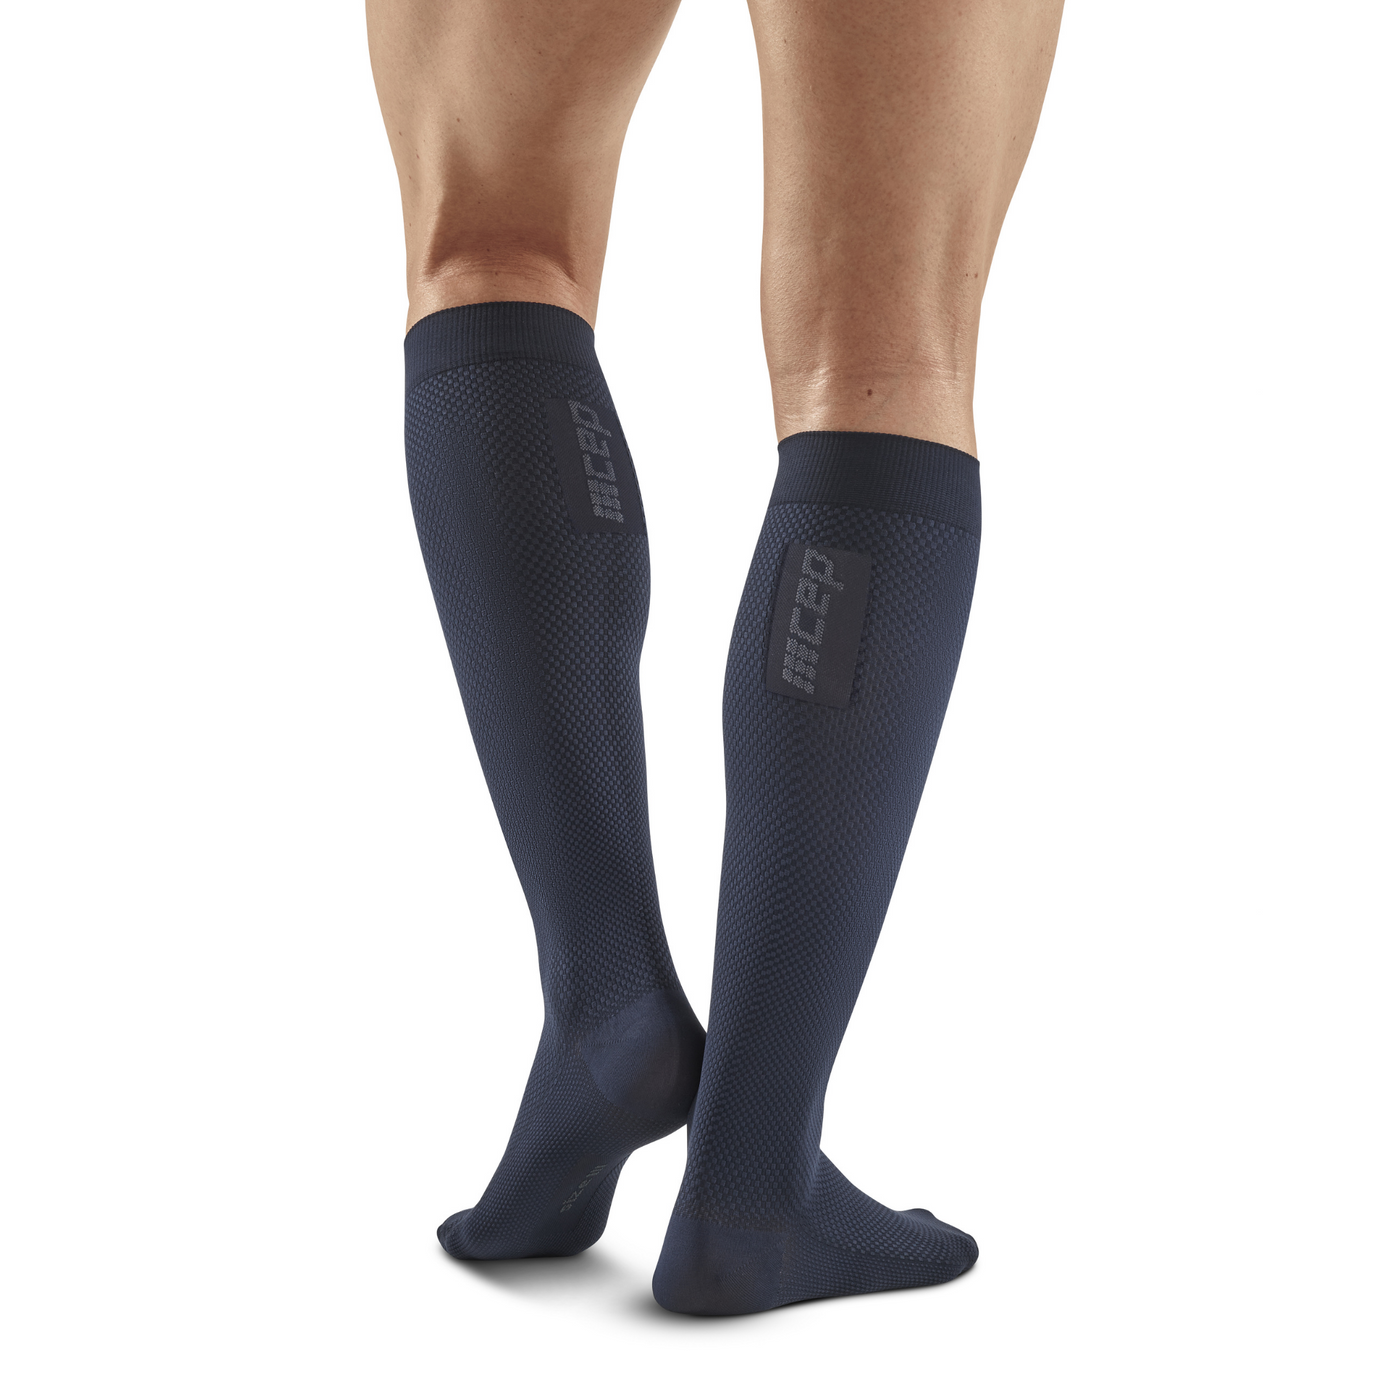 Allday Tall Compression Socks, Men